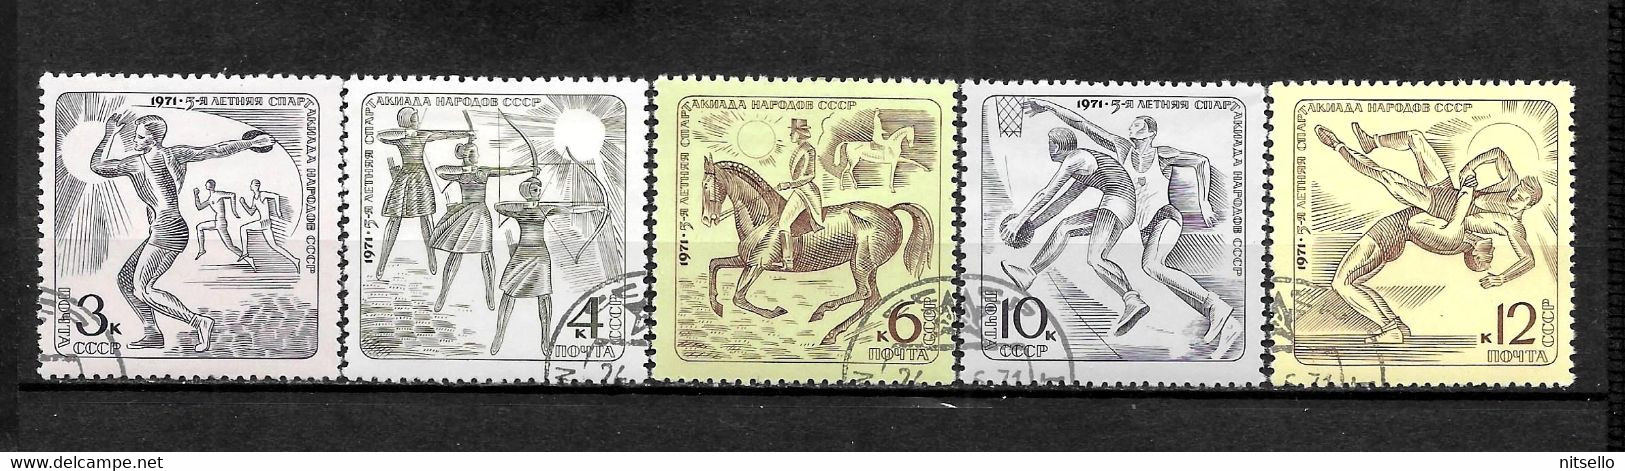 LOTE 2239 B ///  RUSIA   YVERT Nº: 3730/3734  ¡¡¡ OFERTA - LIQUIDATION - JE LIQUIDE !!! - Used Stamps